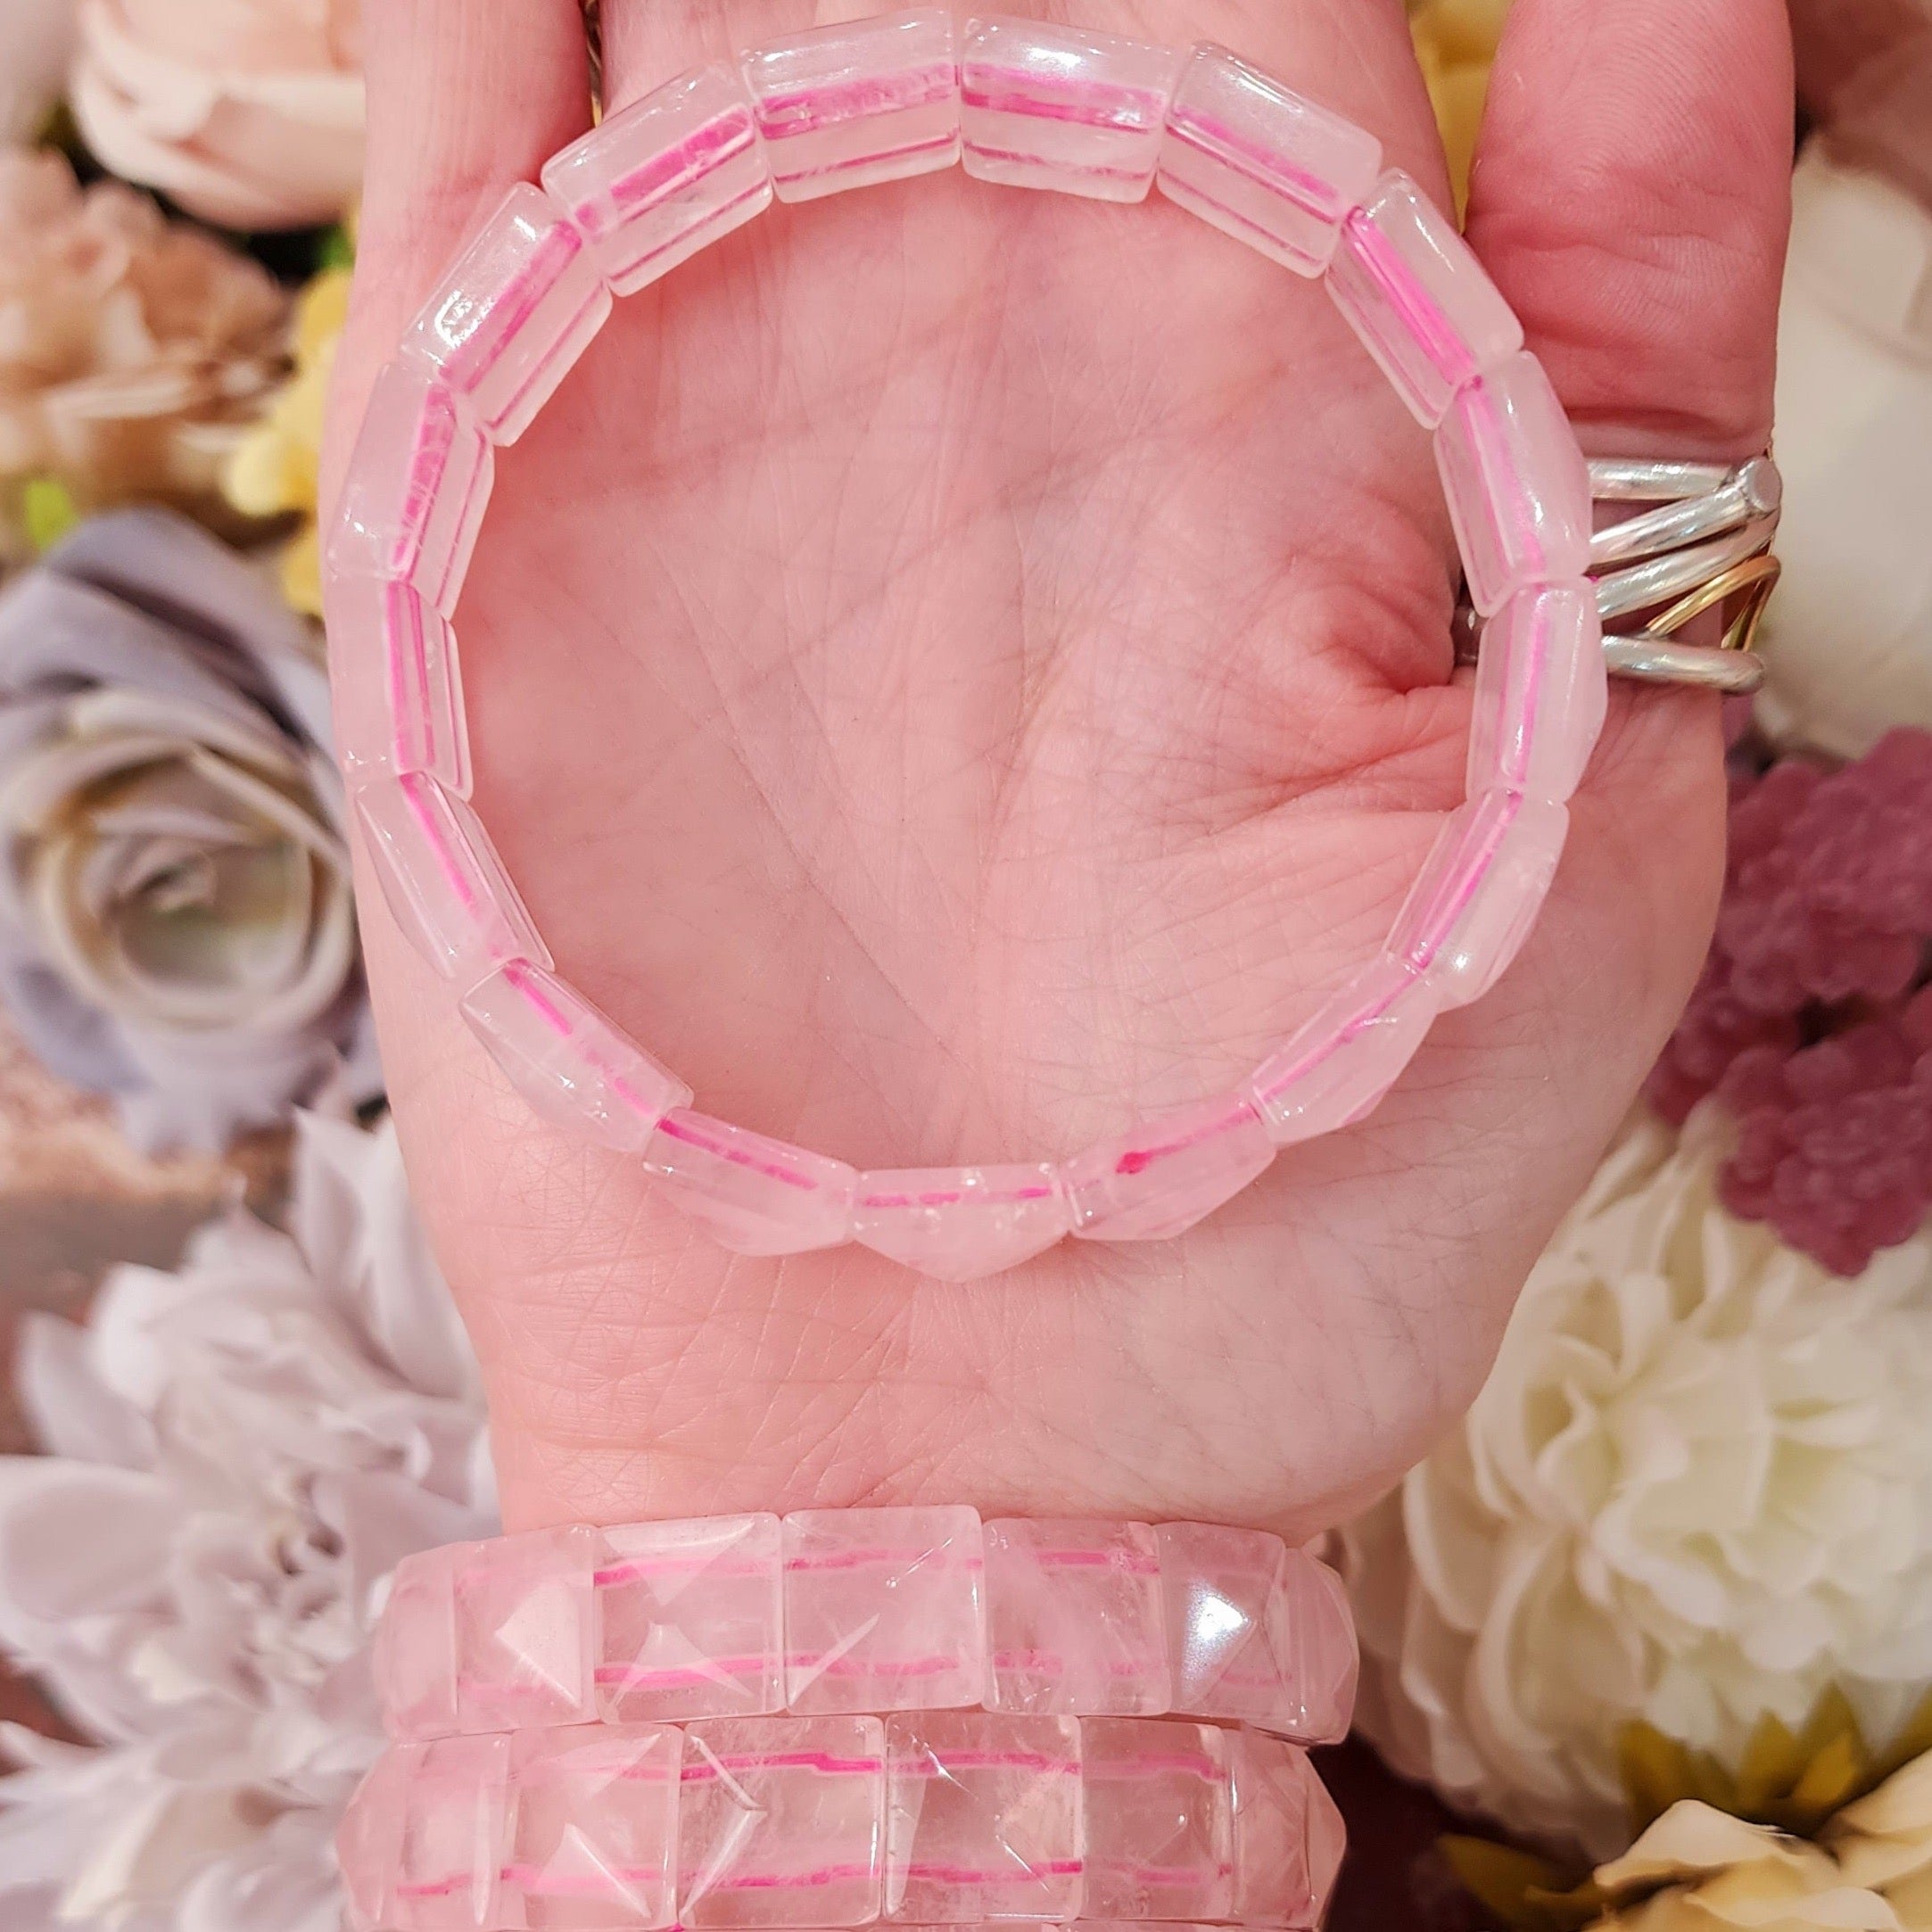 Rose Quartz Stretchy Bangle Bracelet for Loving Yourself and Improving Self-Esteem